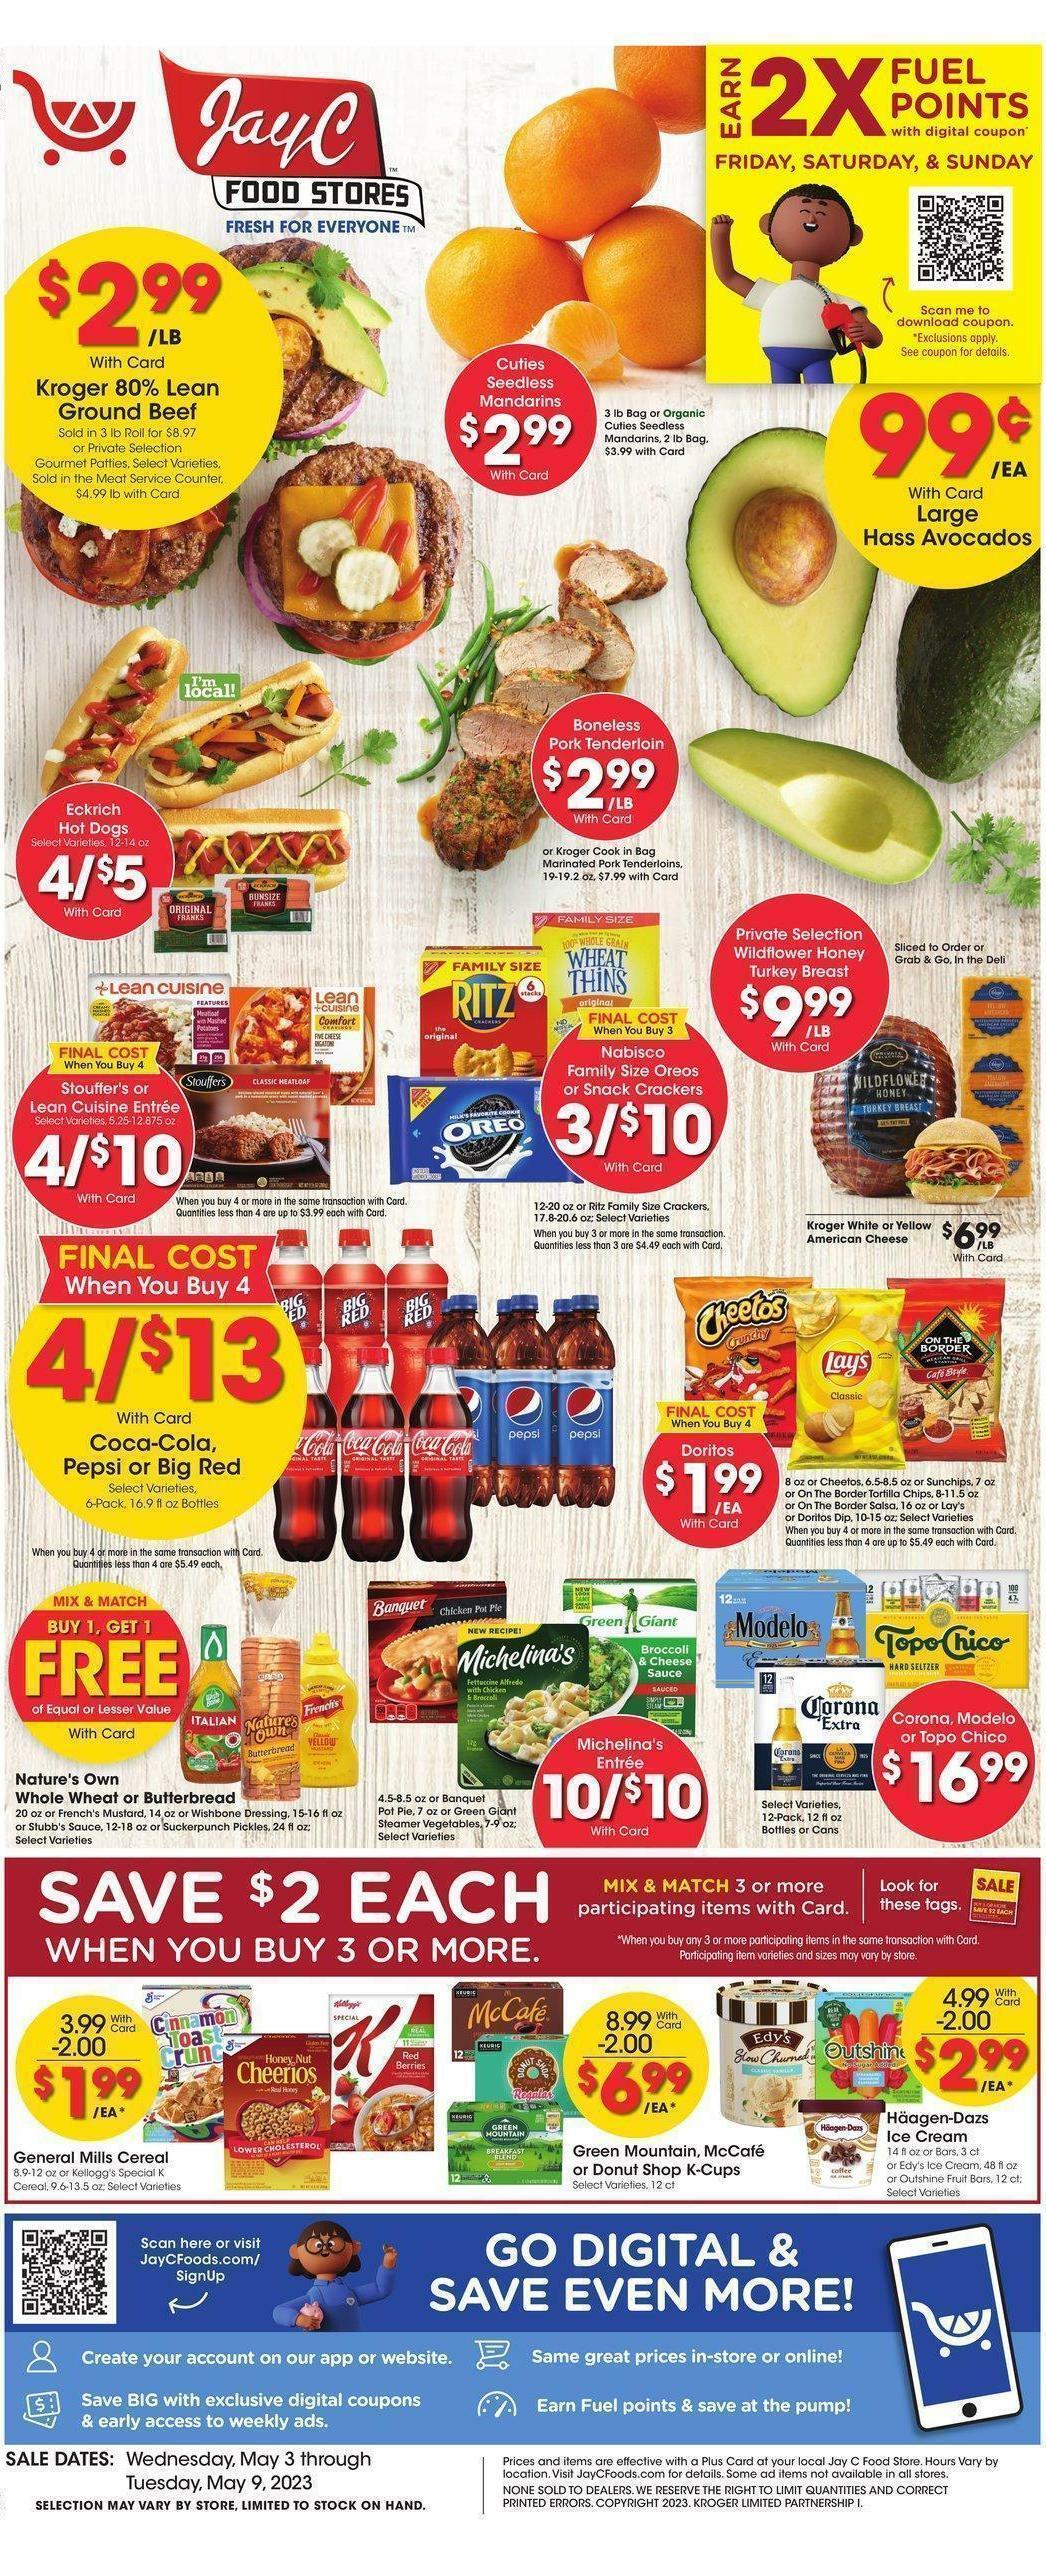 Jay C Food Weekly Ad from May 3